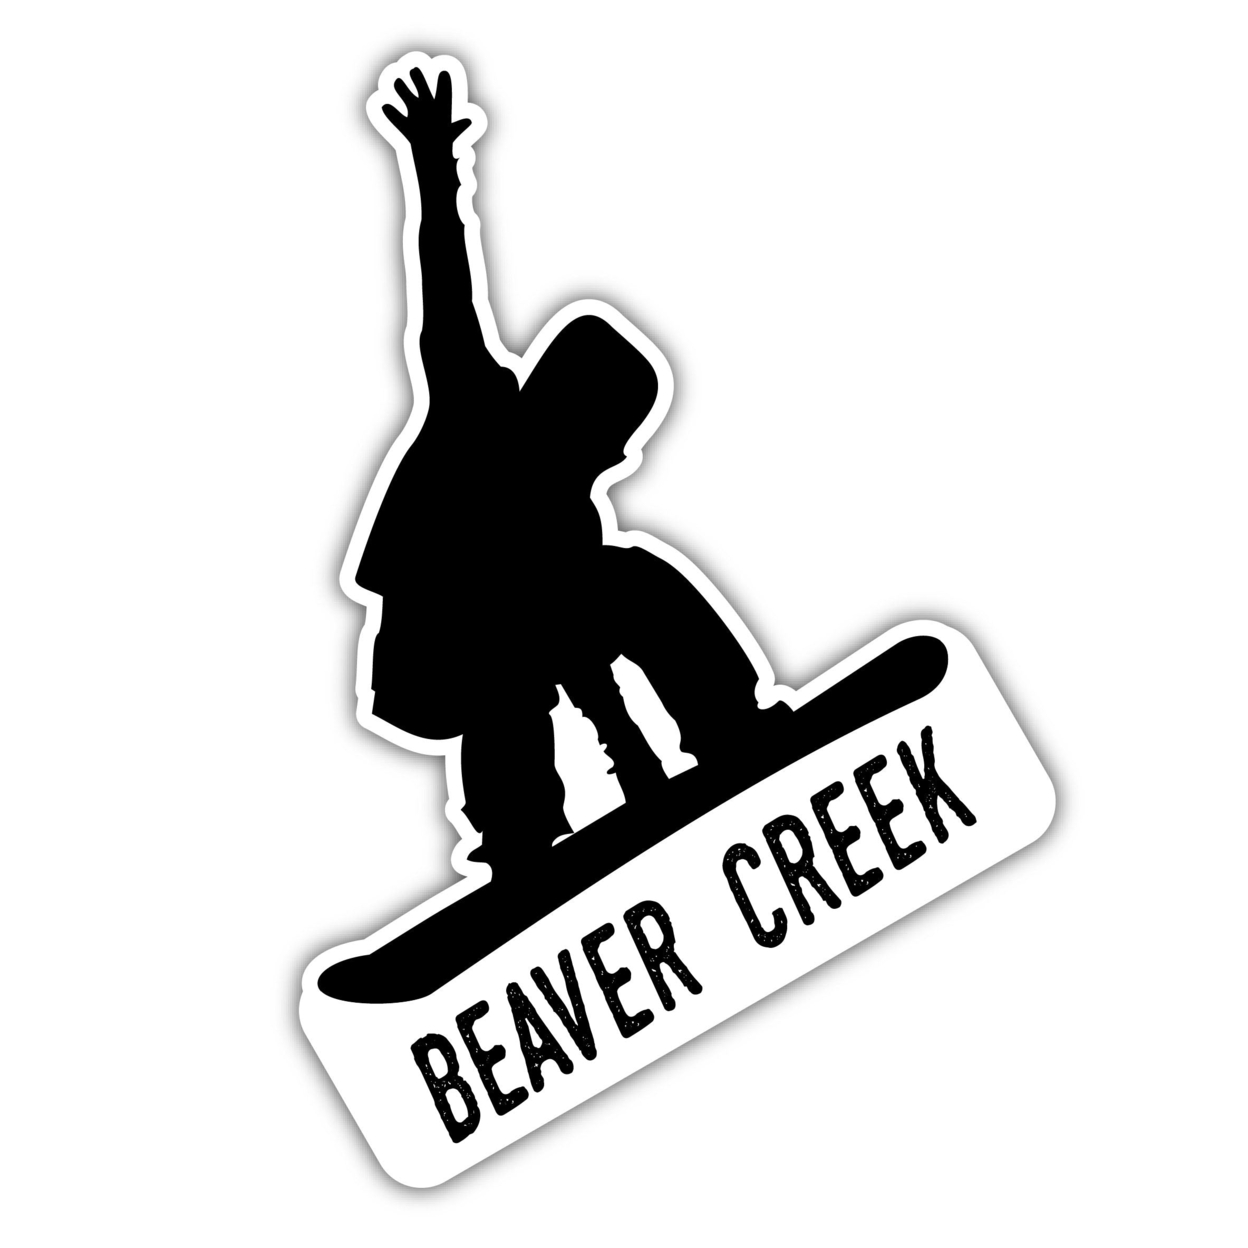 Beaver Creek Colorado Ski Adventures Souvenir 4 Inch Vinyl Decal Sticker Board Design